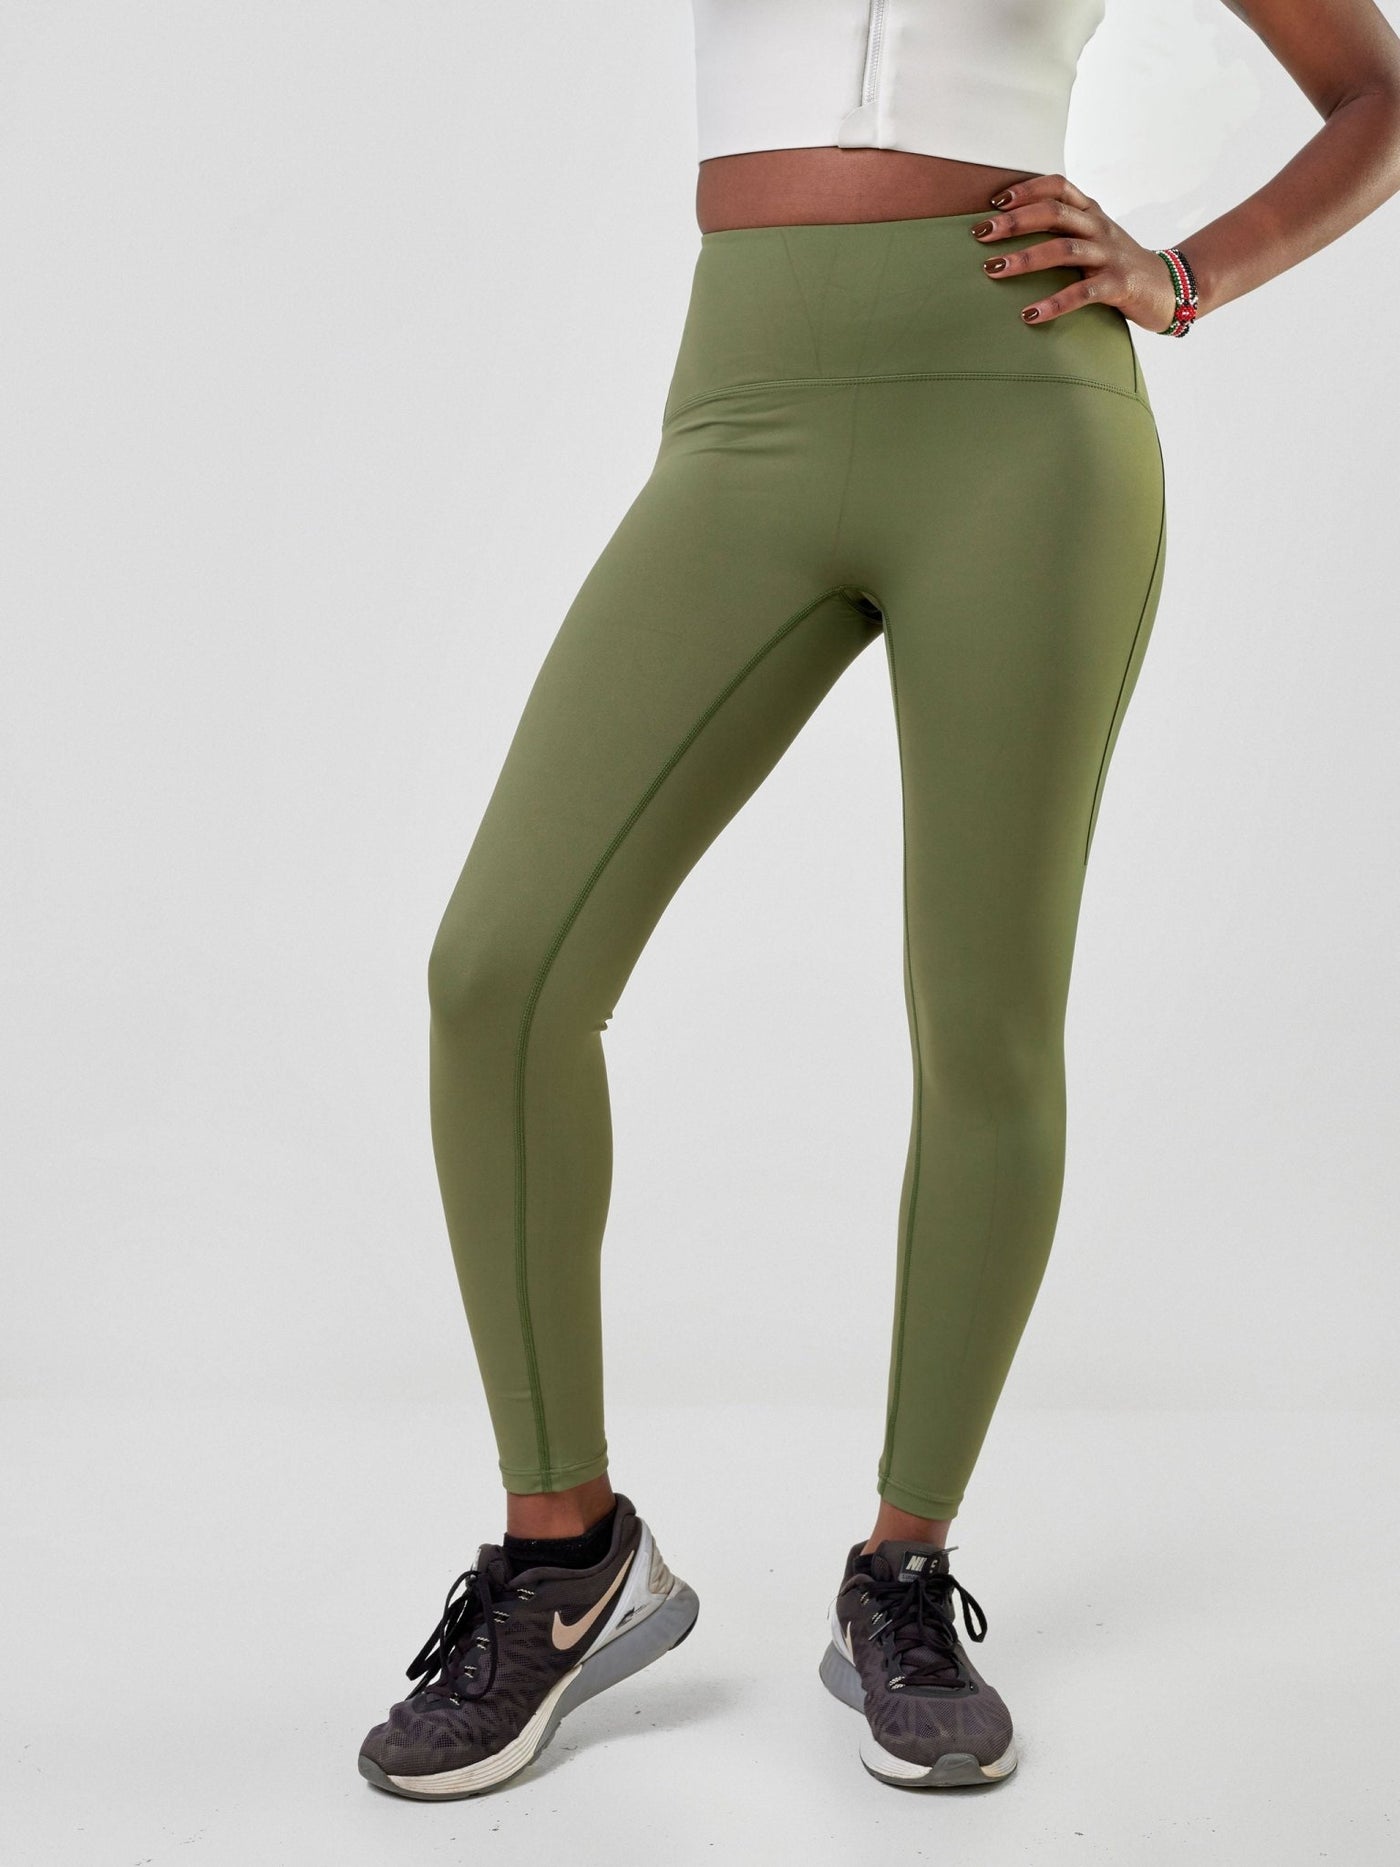 Ava Fitness Lilly High Waisted Leggings - Green - Shopzetu